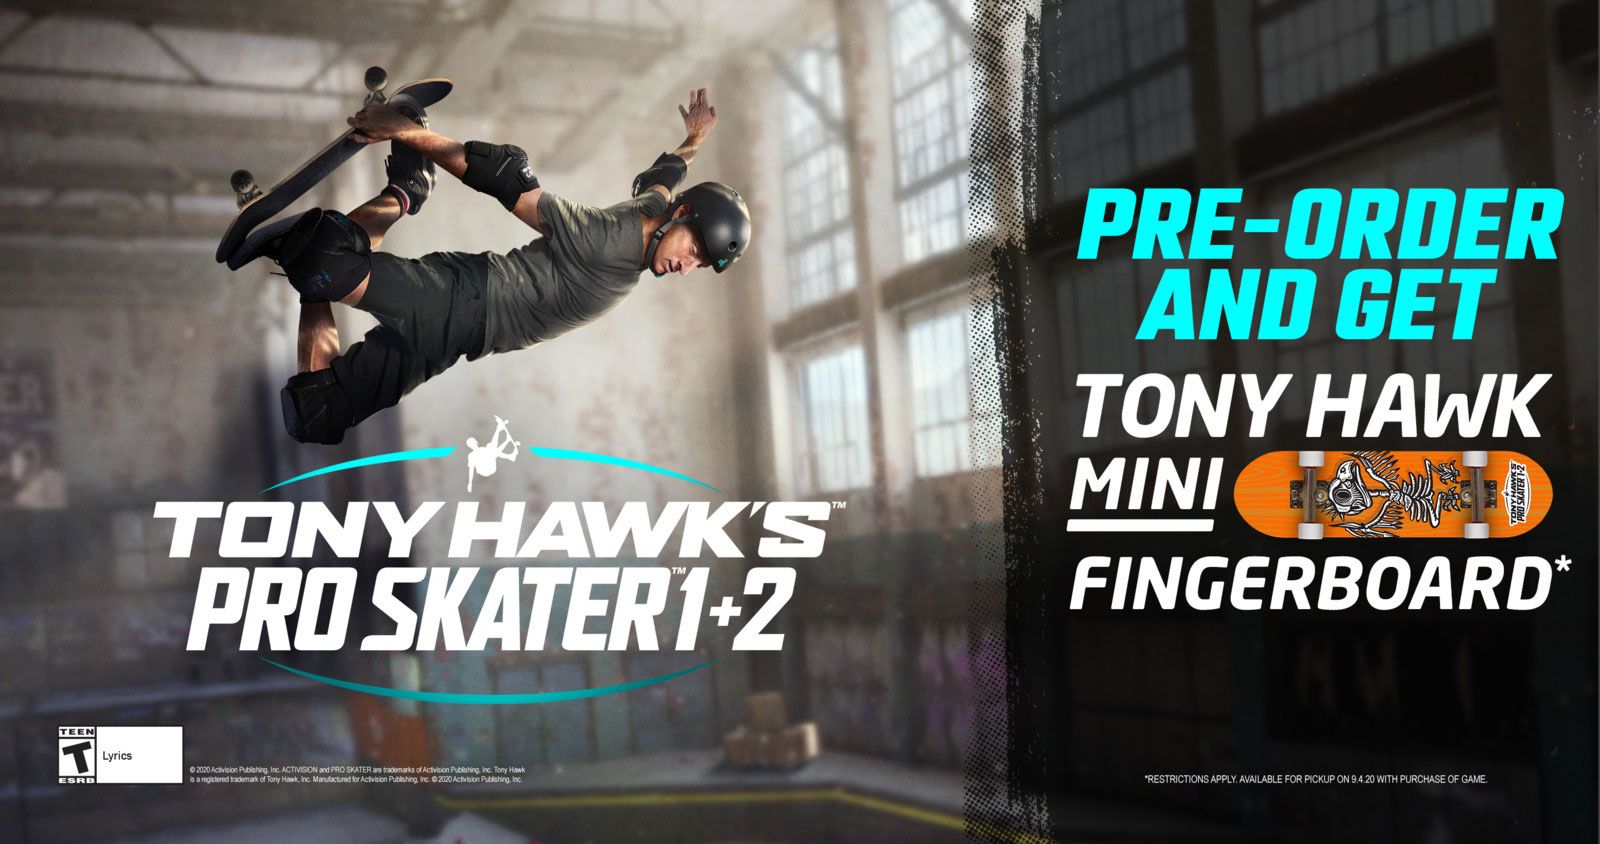 Tony Hawk's Pro Skater remaster